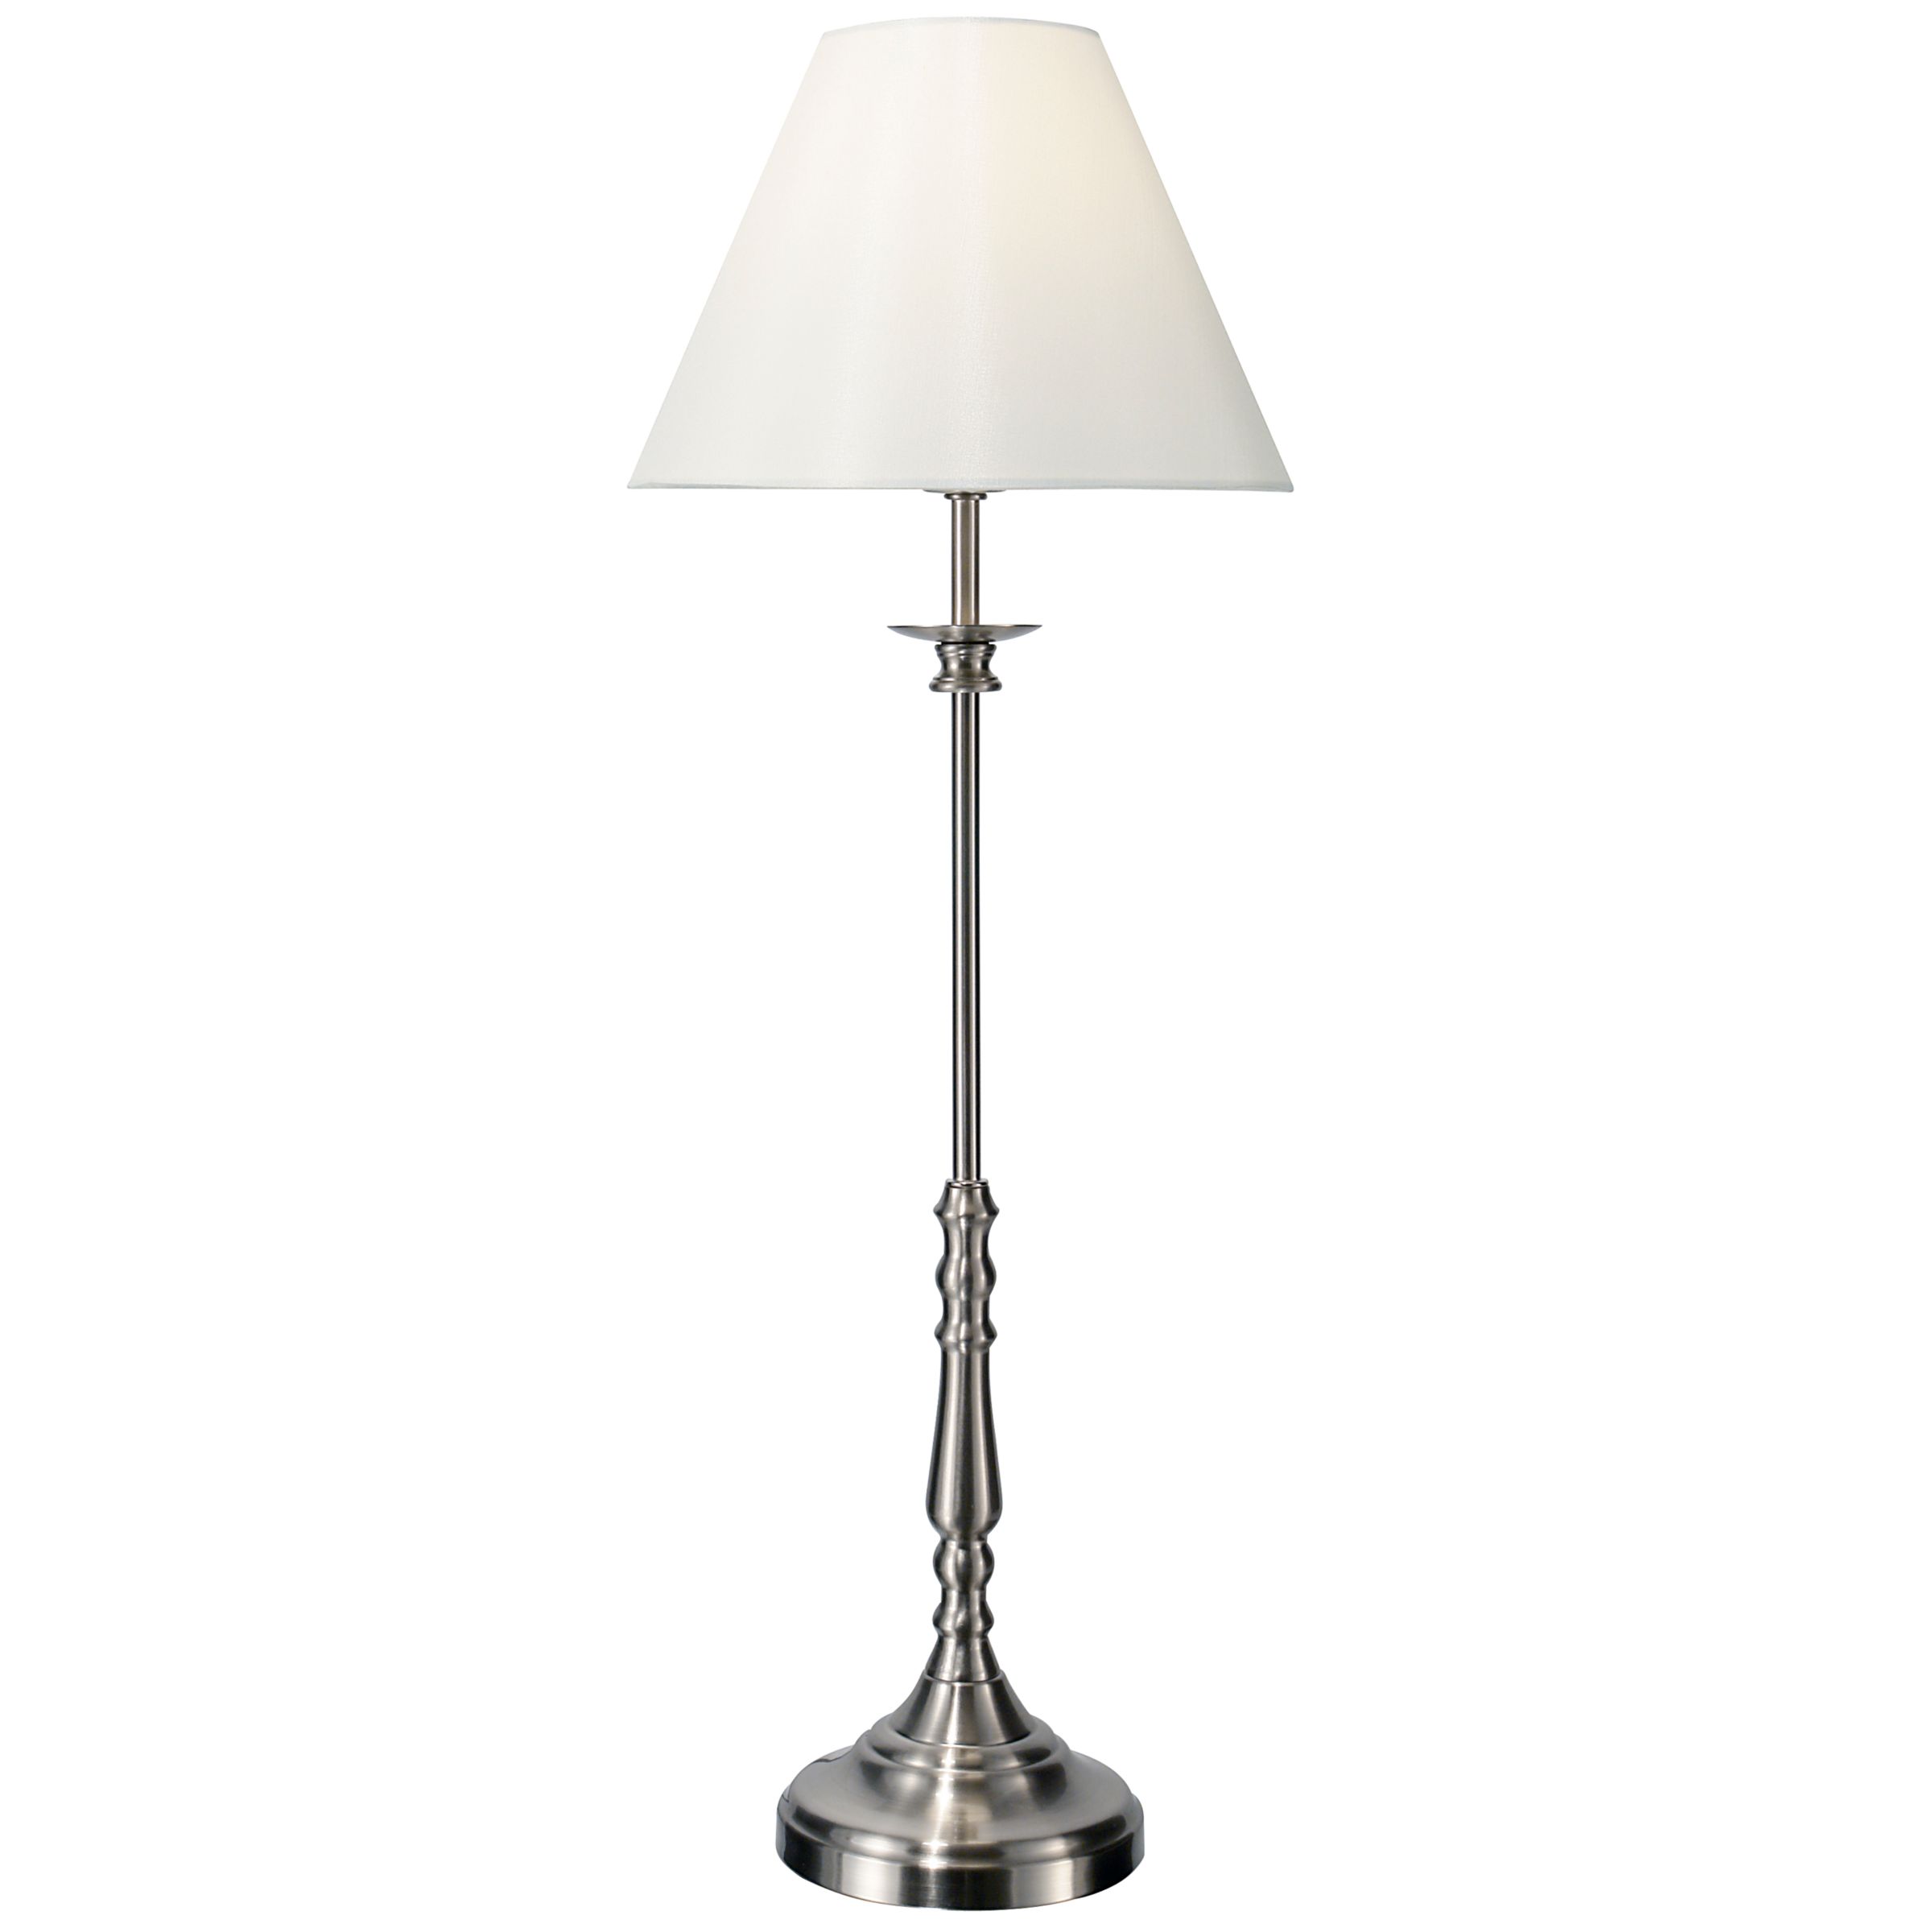 Sloane Table Lamp, Nickel